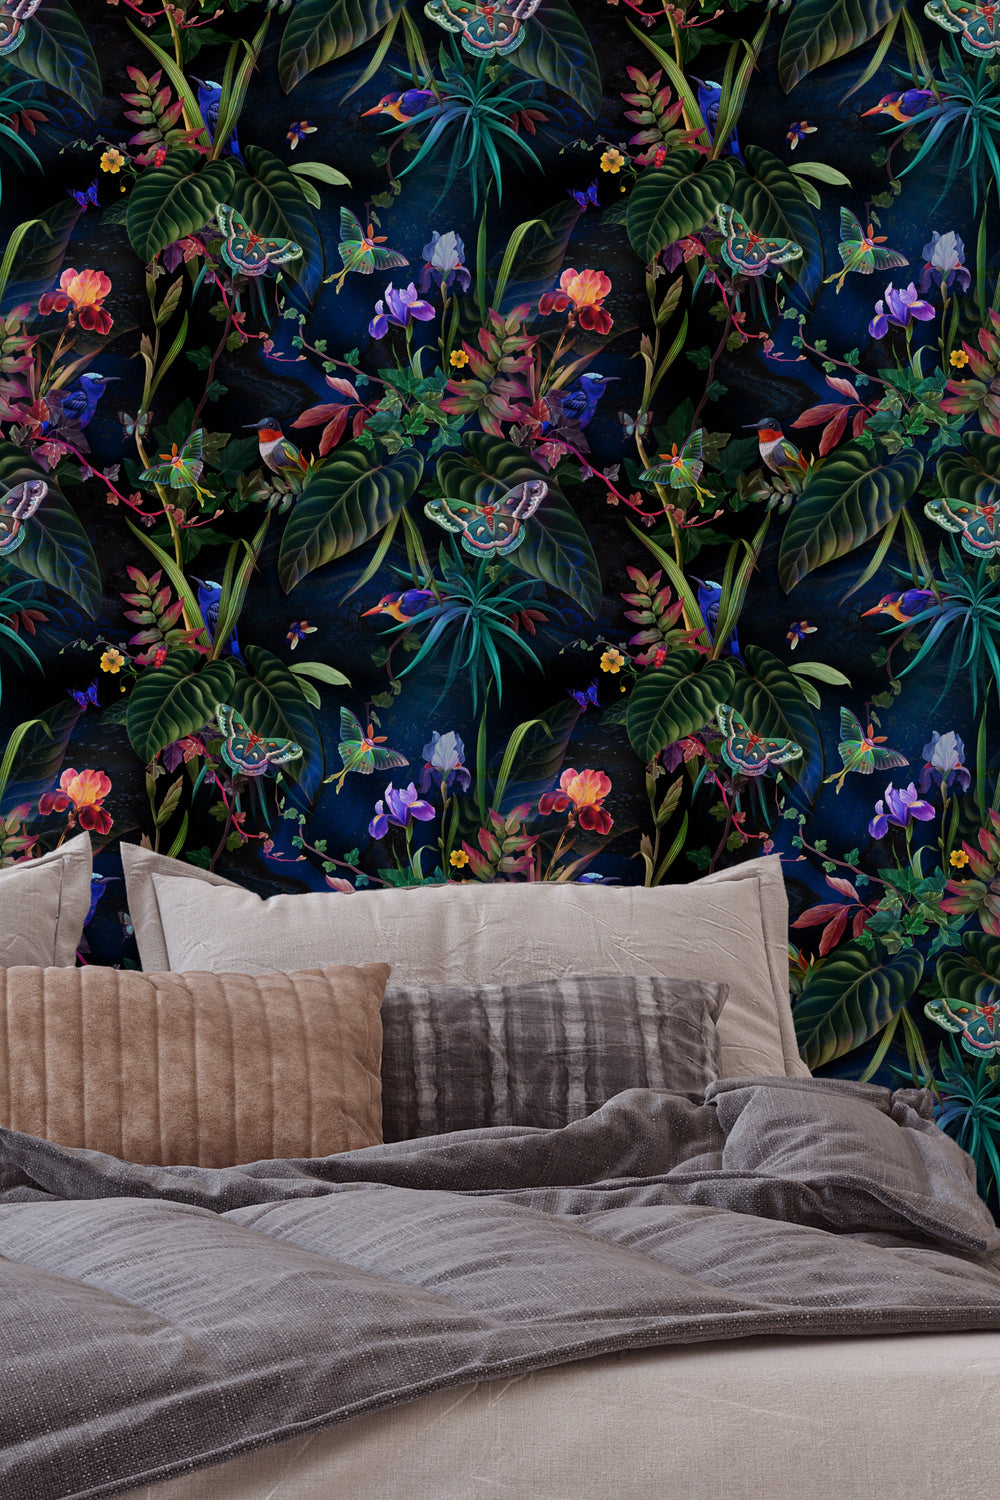 secret garden at night peel and stick wallpaper for badroom